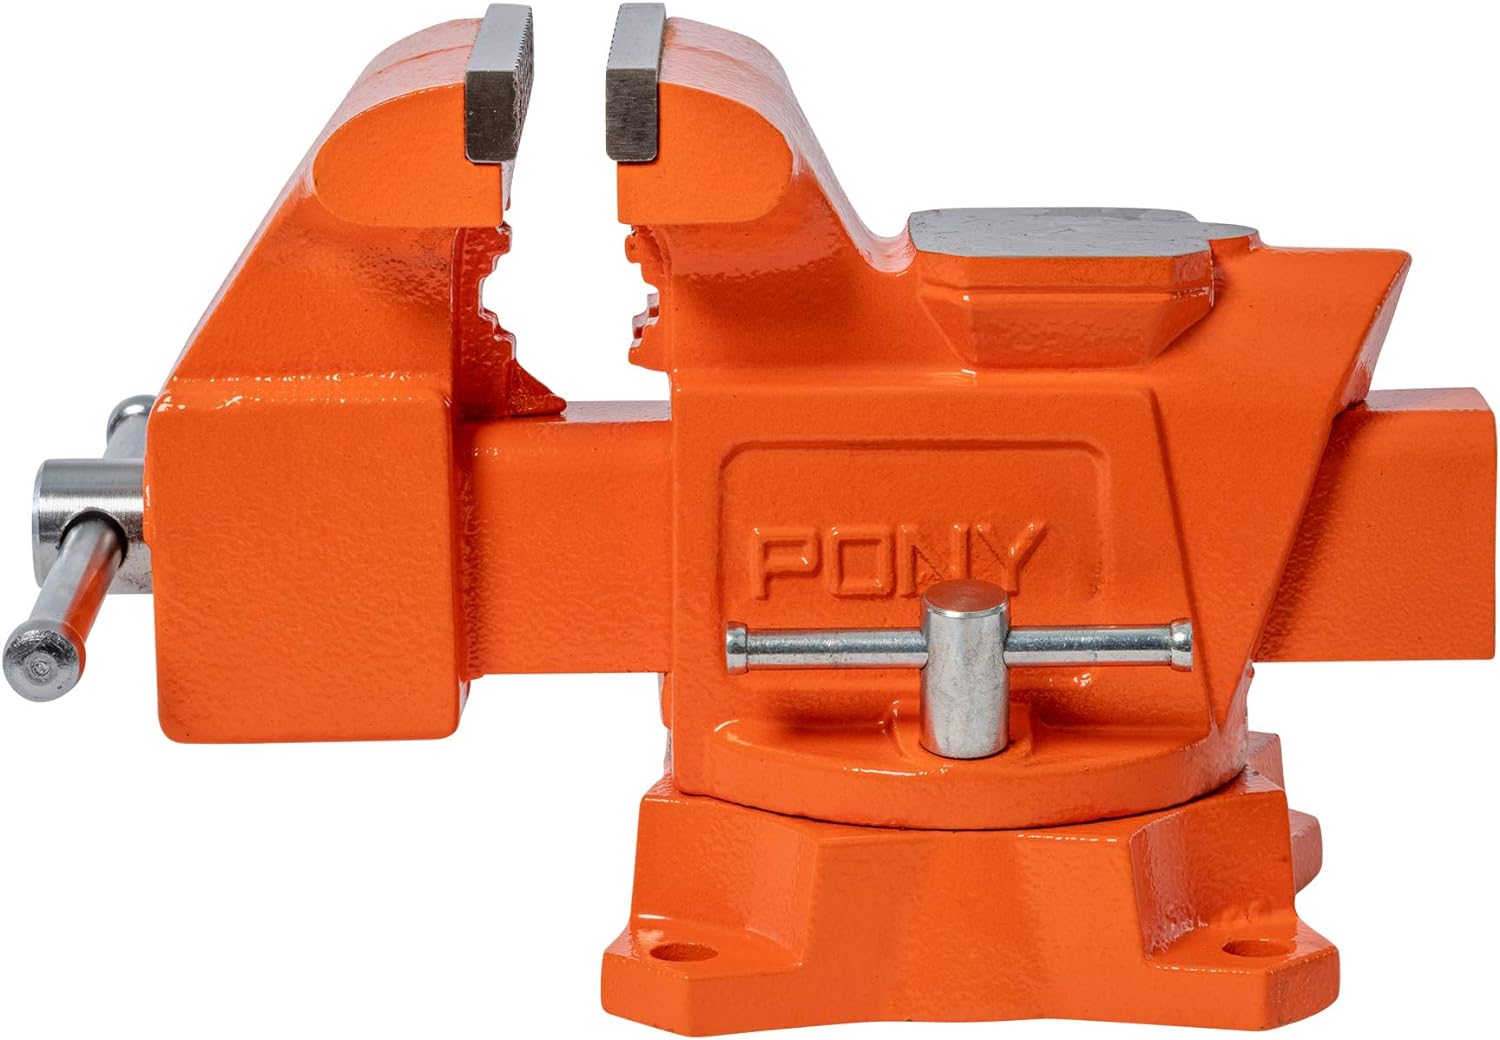 Pony 4' Heavy-Duty Workshop Bench Vise Swivel Base Power Tool Services